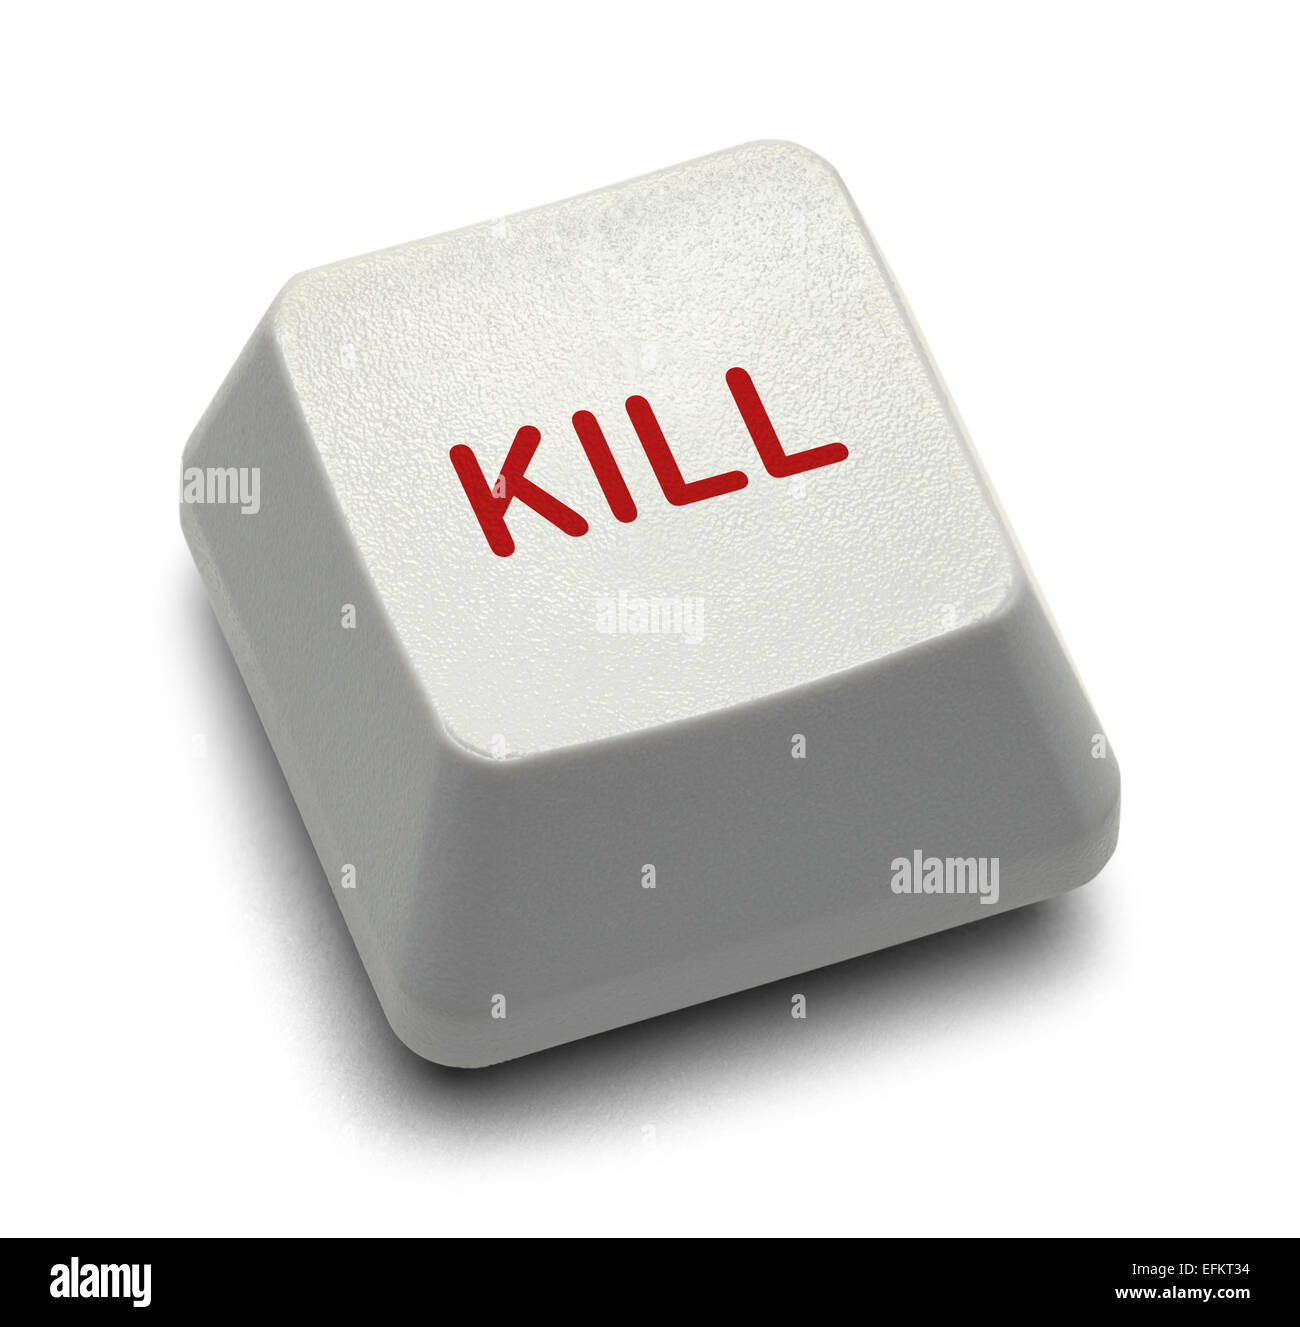 Computer Key Kill Switch Isolated on White Background. Stock Photo